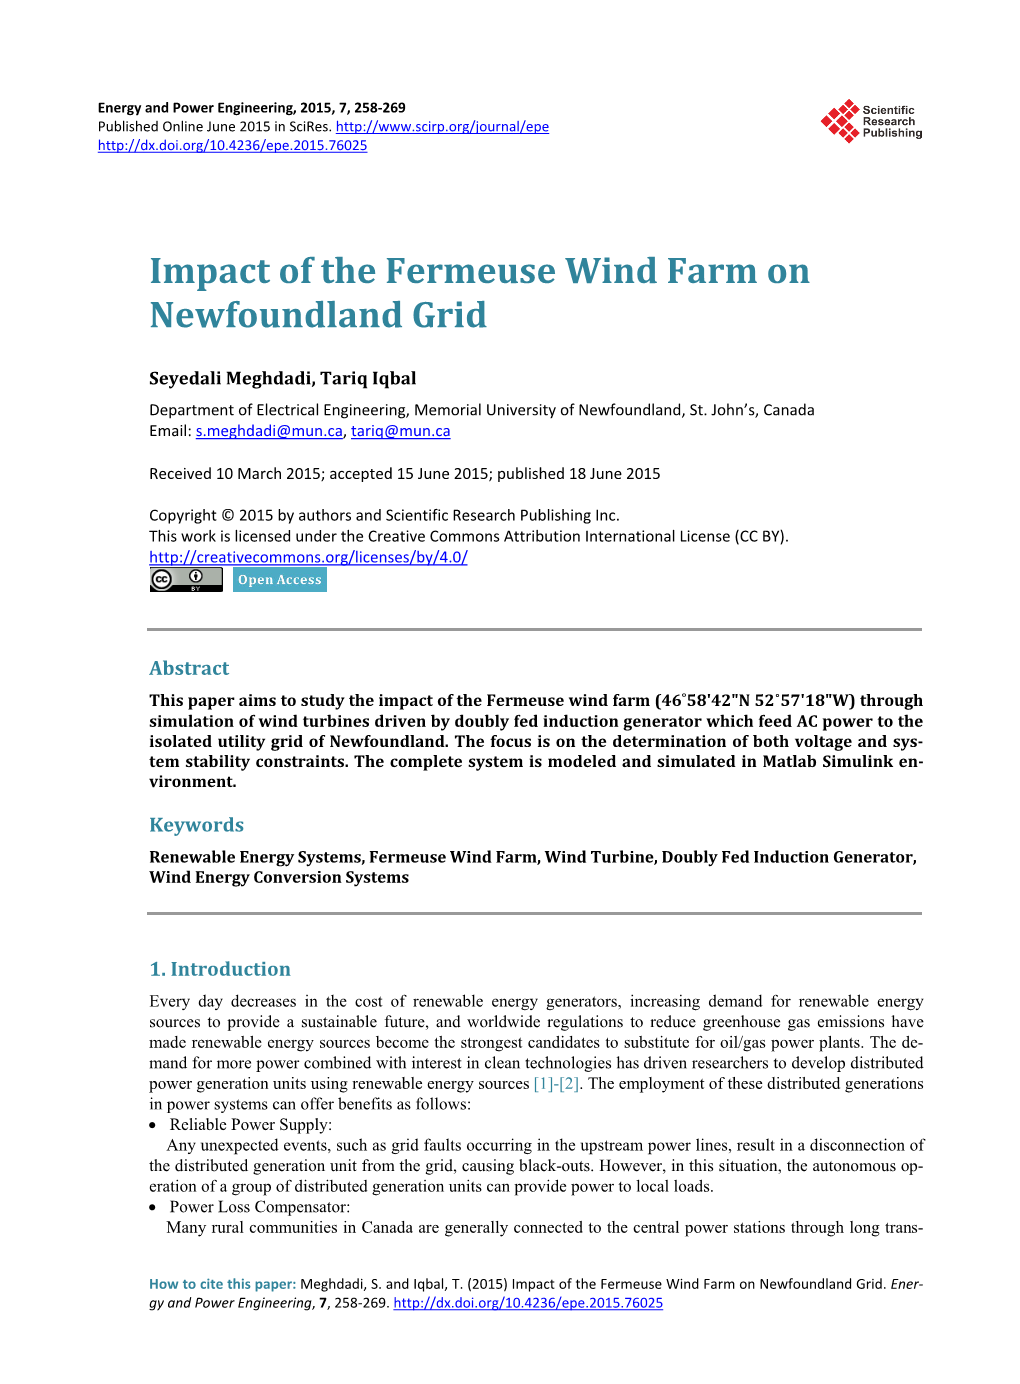 Impact of the Fermeuse Wind Farm on Newfoundland Grid